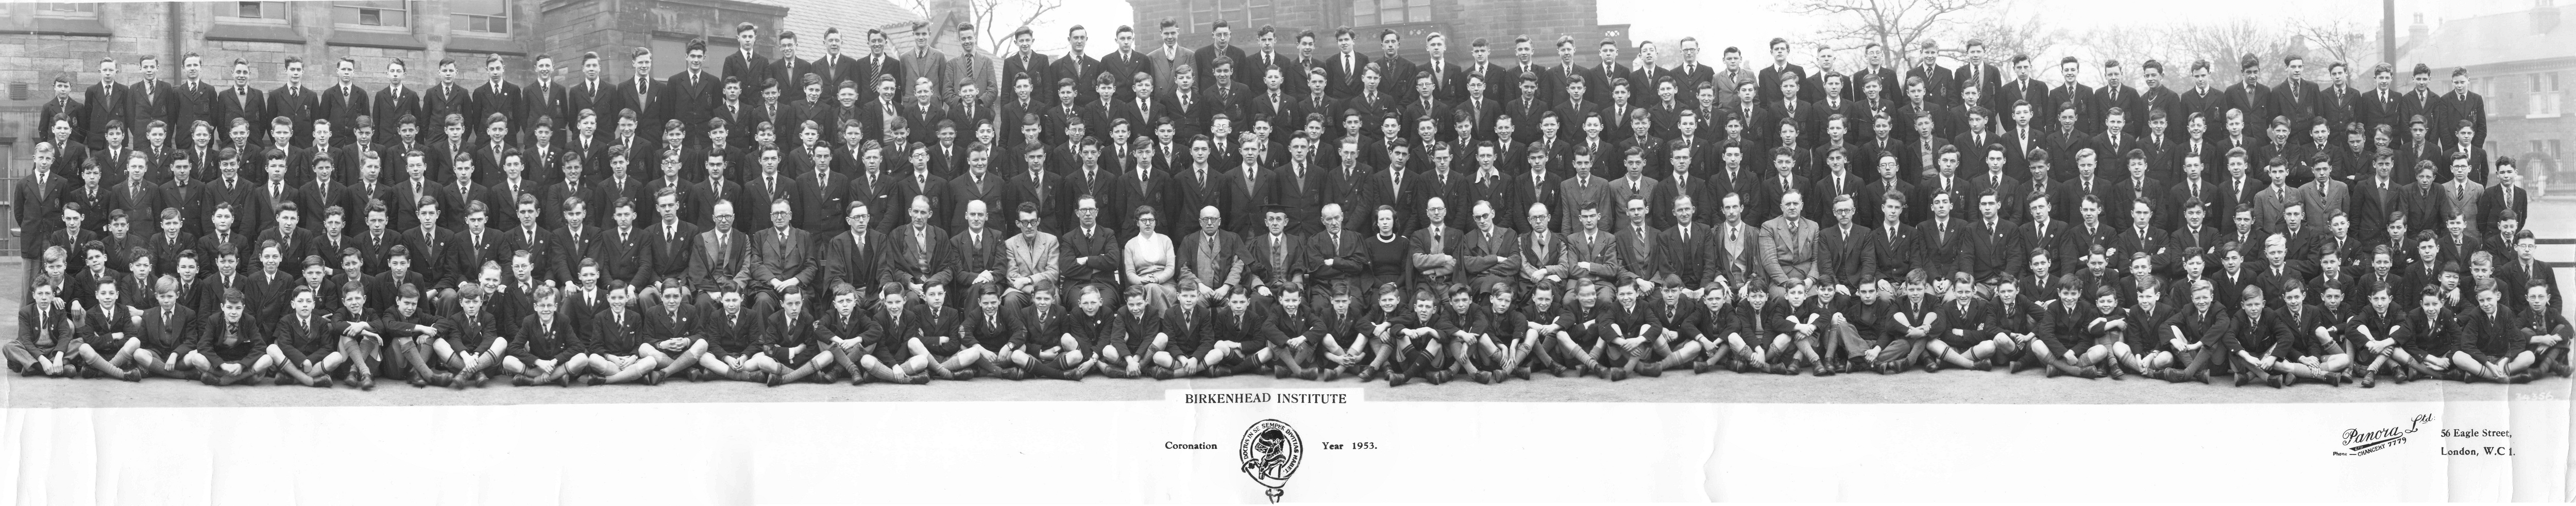 Whole School Photograph 1953